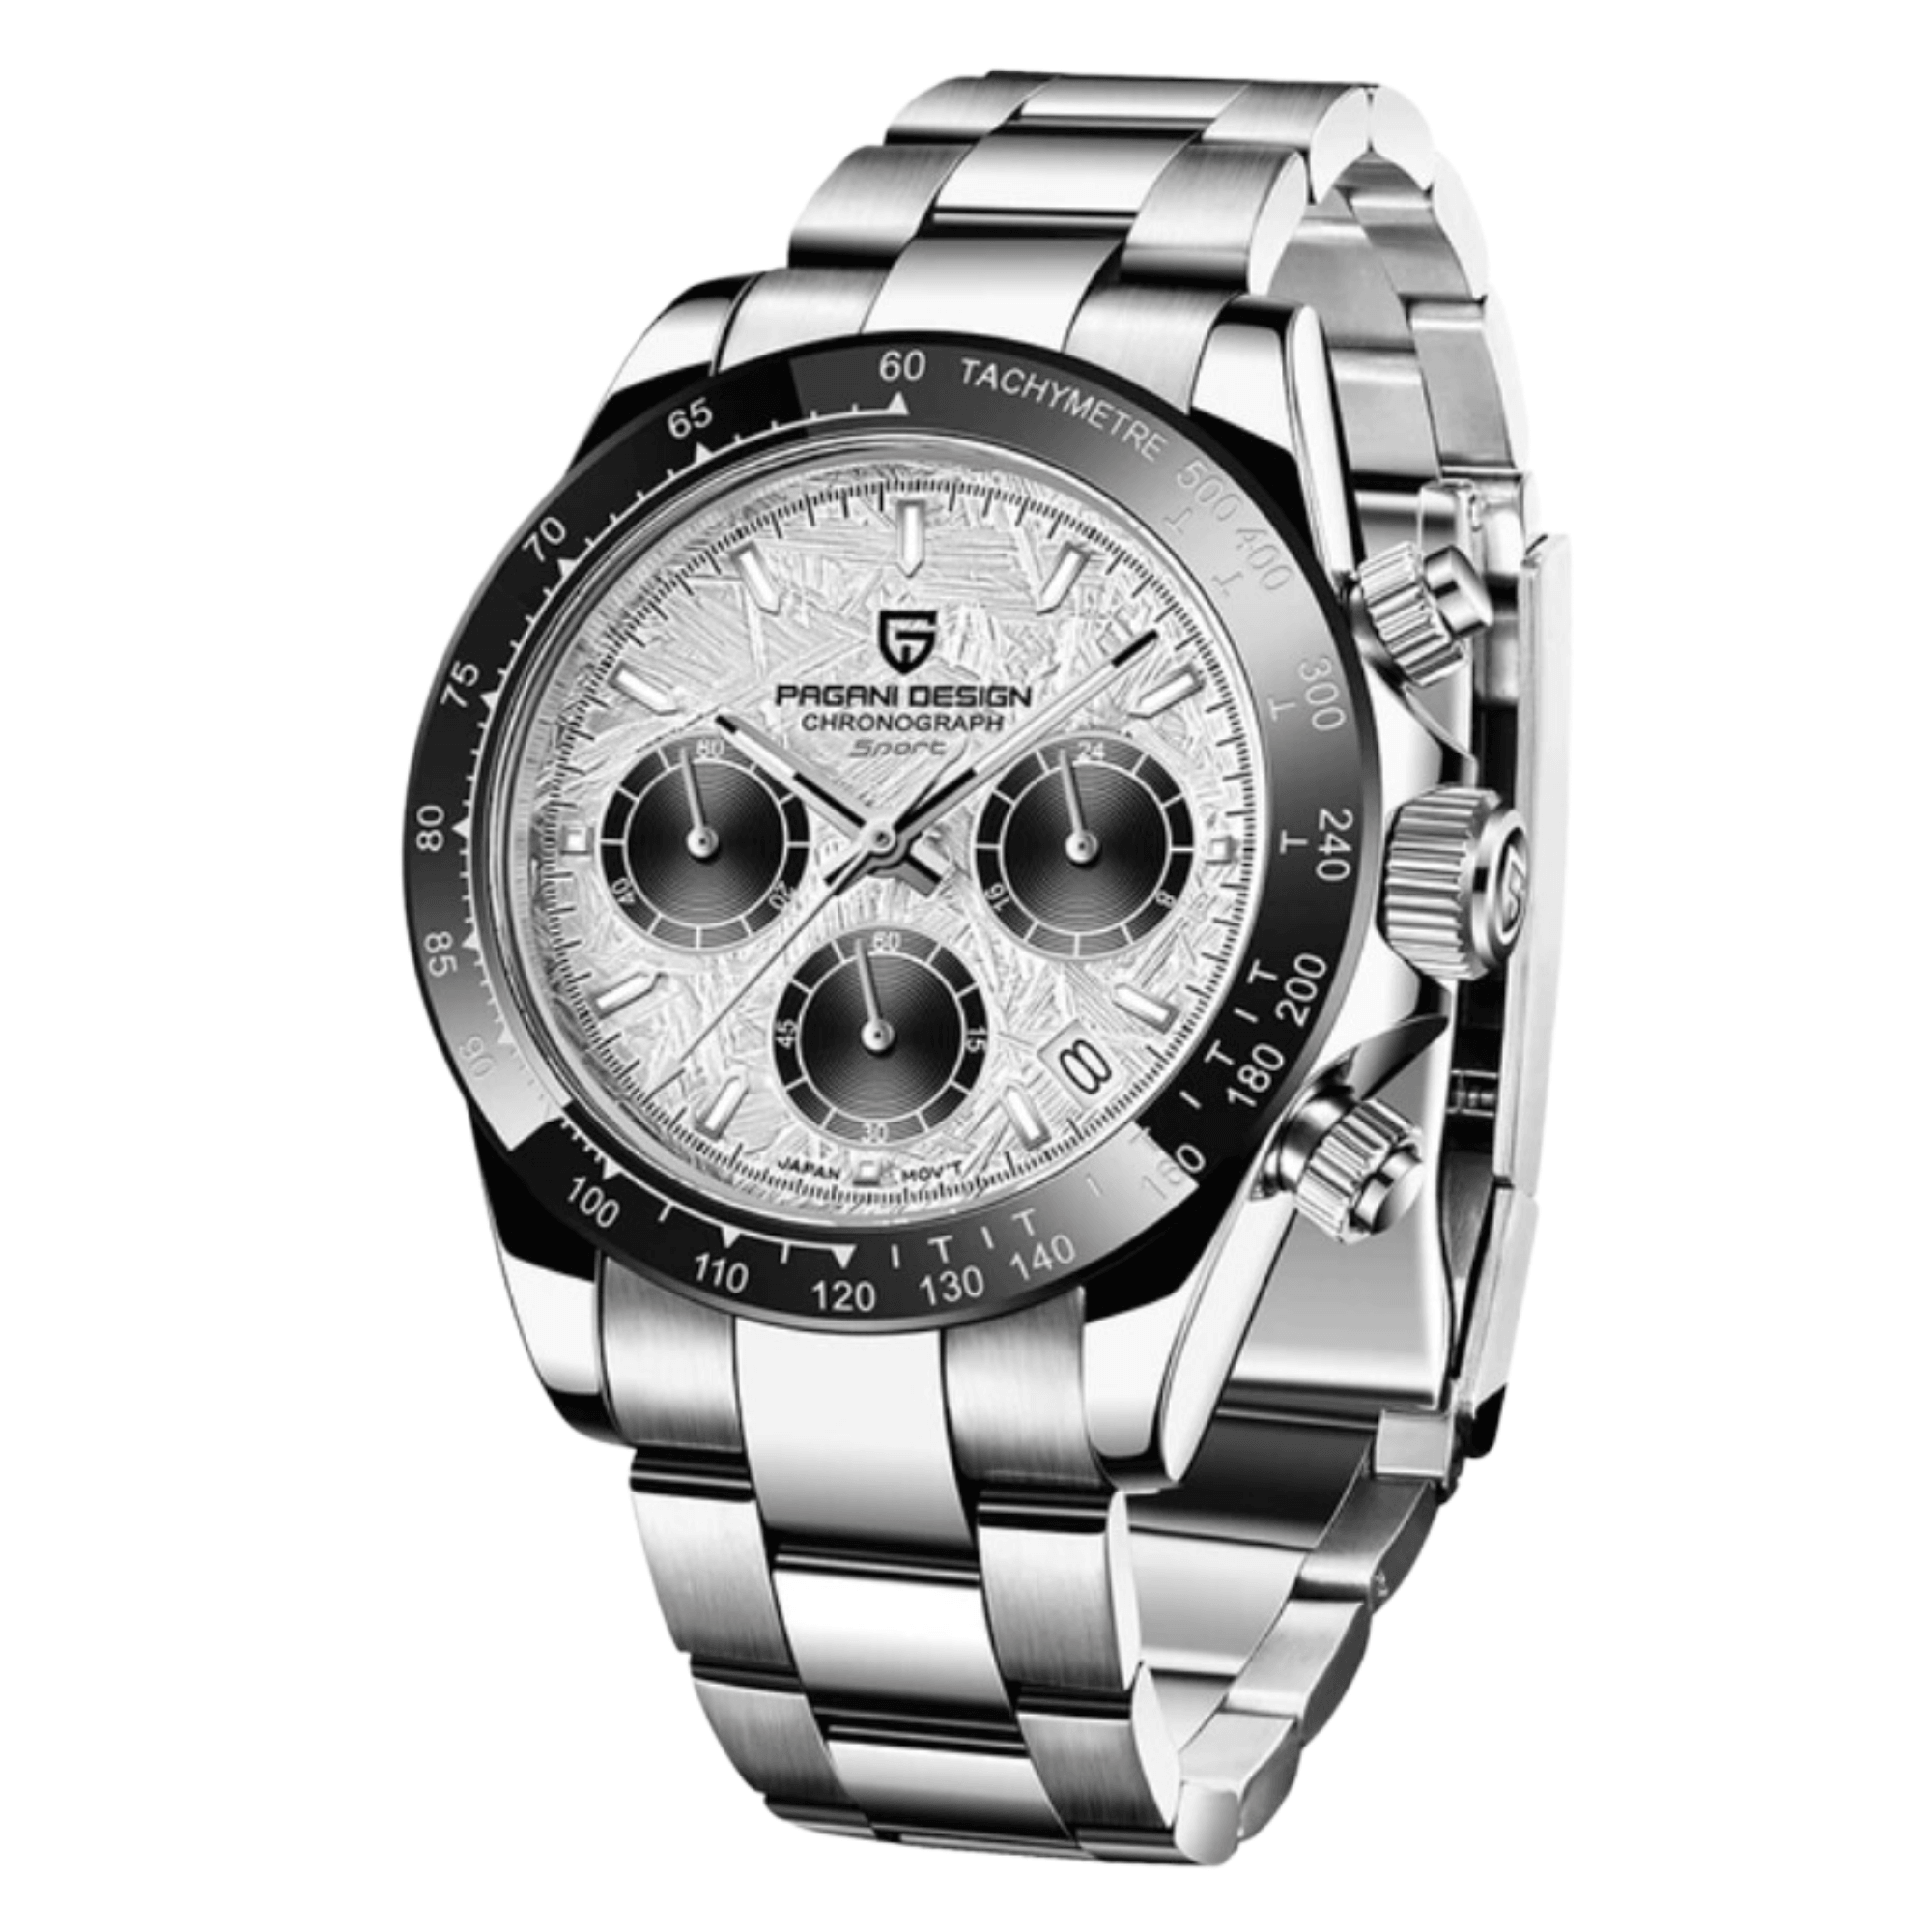 Pagani Design PD-1644 | Luxury | Waterproof Mechanical Automatic Movement SeikoVK63 | Stainless Steel Men's 40MM Watch Daytona - Meteorite Dial